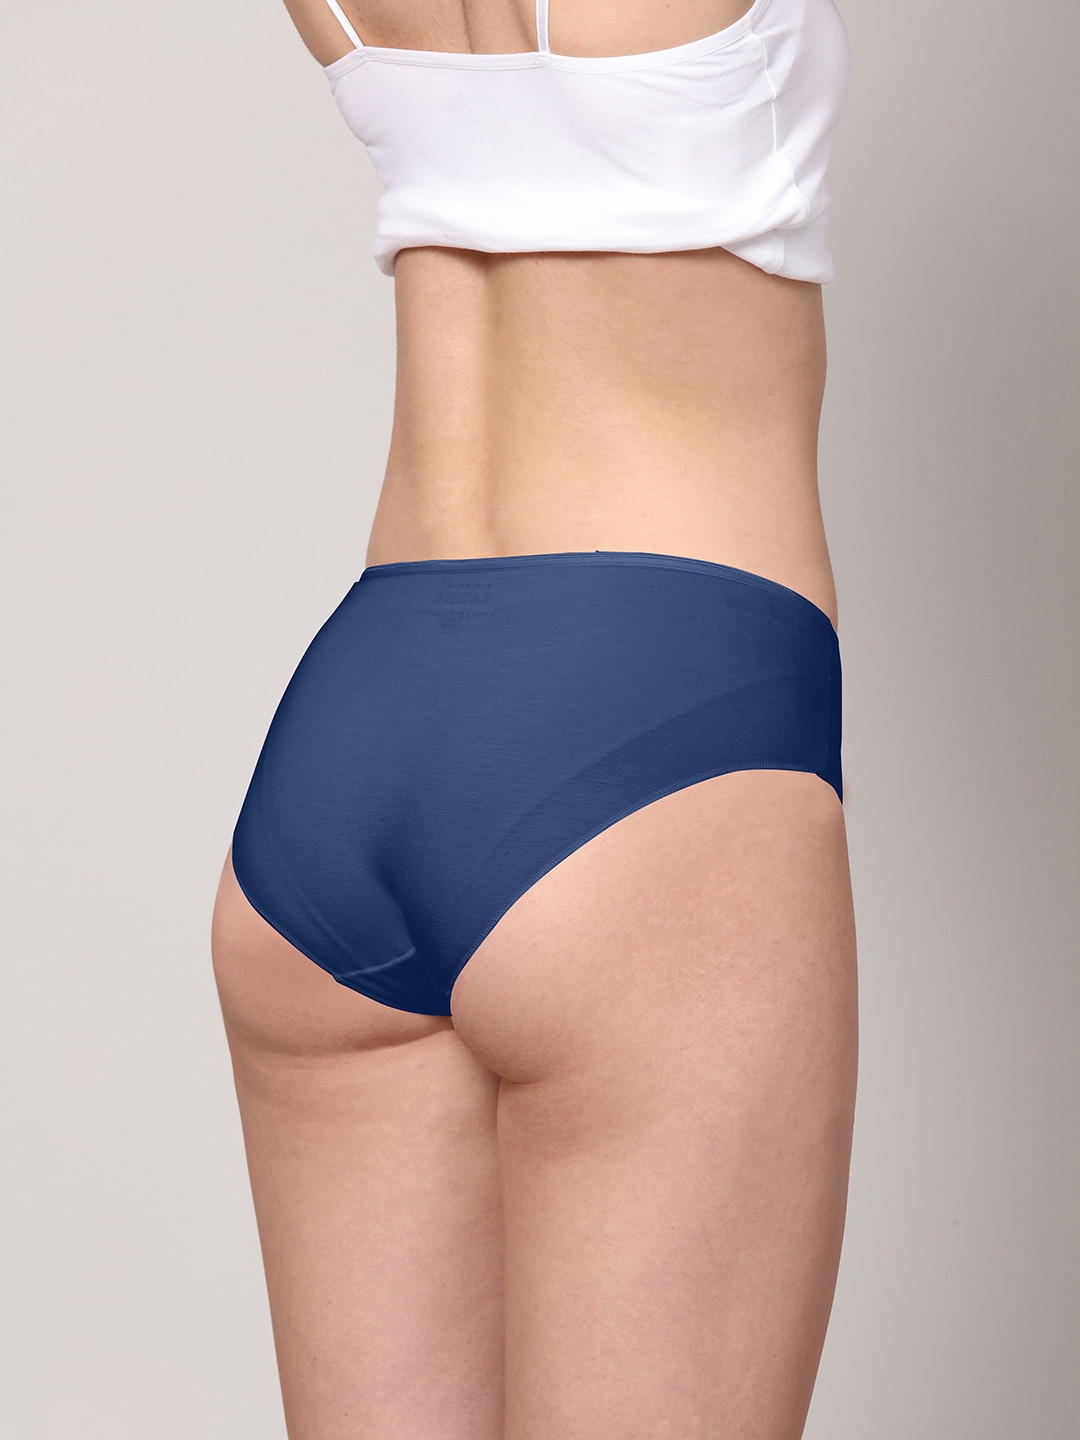 AshleyandAlvis | AshleyandAlvis Women's Panties Micro Modal, Anti Bacterial, Skinny Soft, Premium Hipster  -No Itching, Sweat Proof, Double In-seam Gusset 4